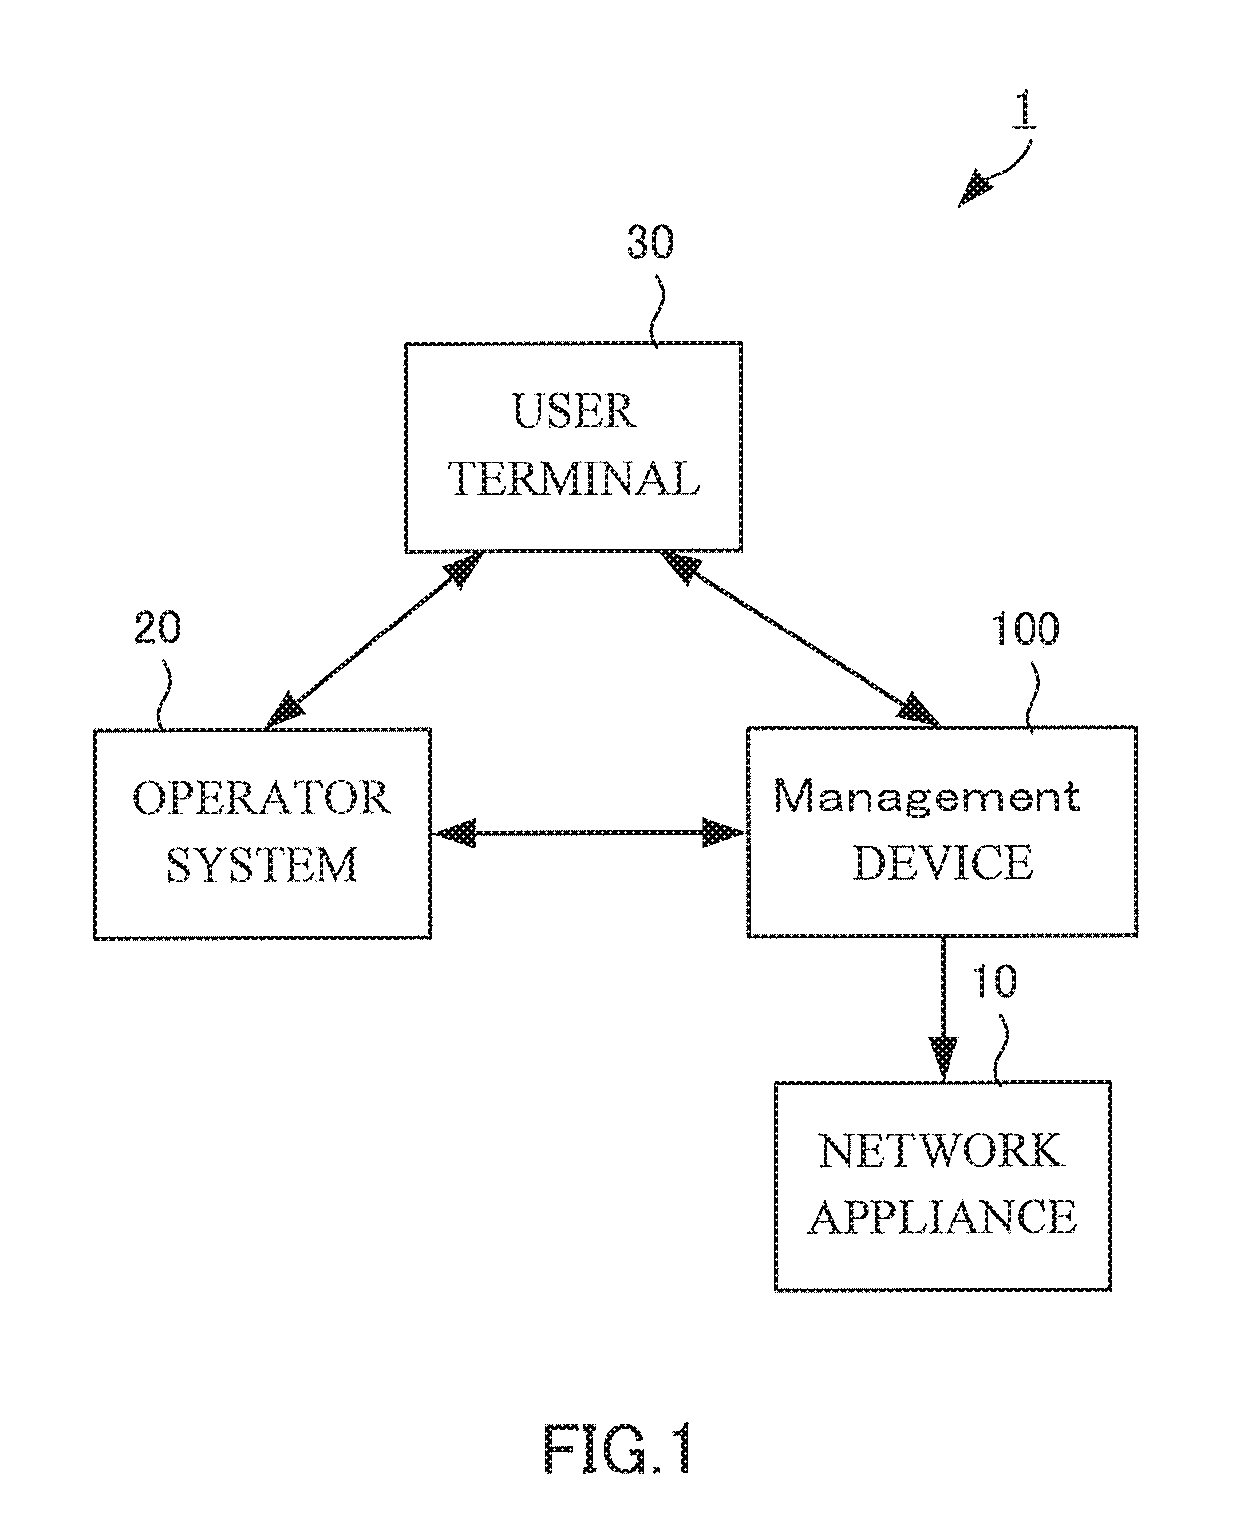 Management device, control method, and program